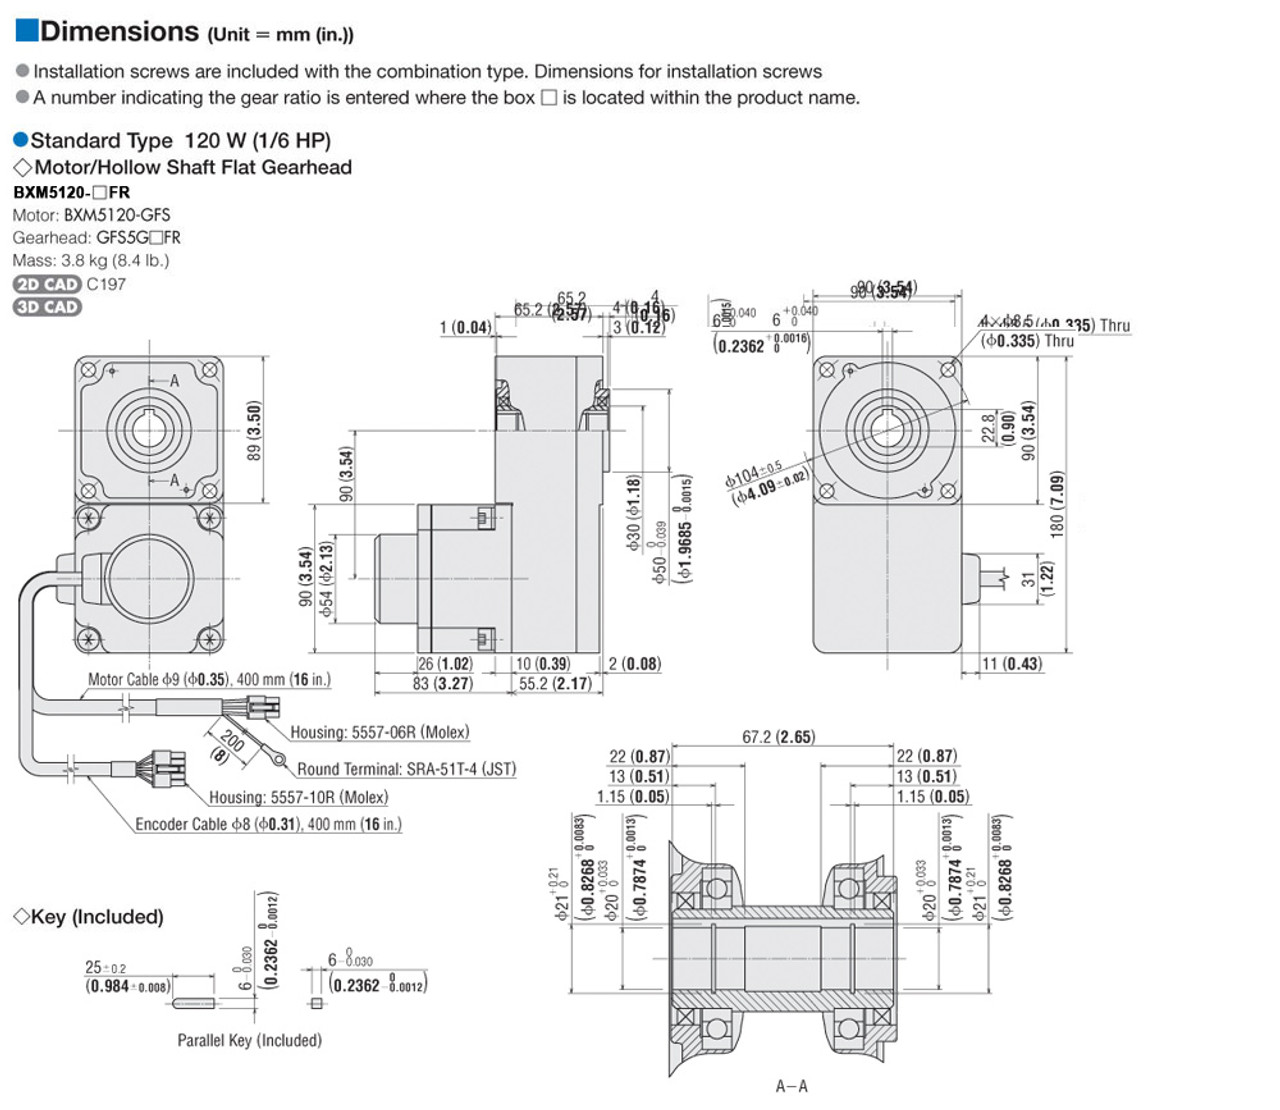 BXM5120-30FR - Dimensions